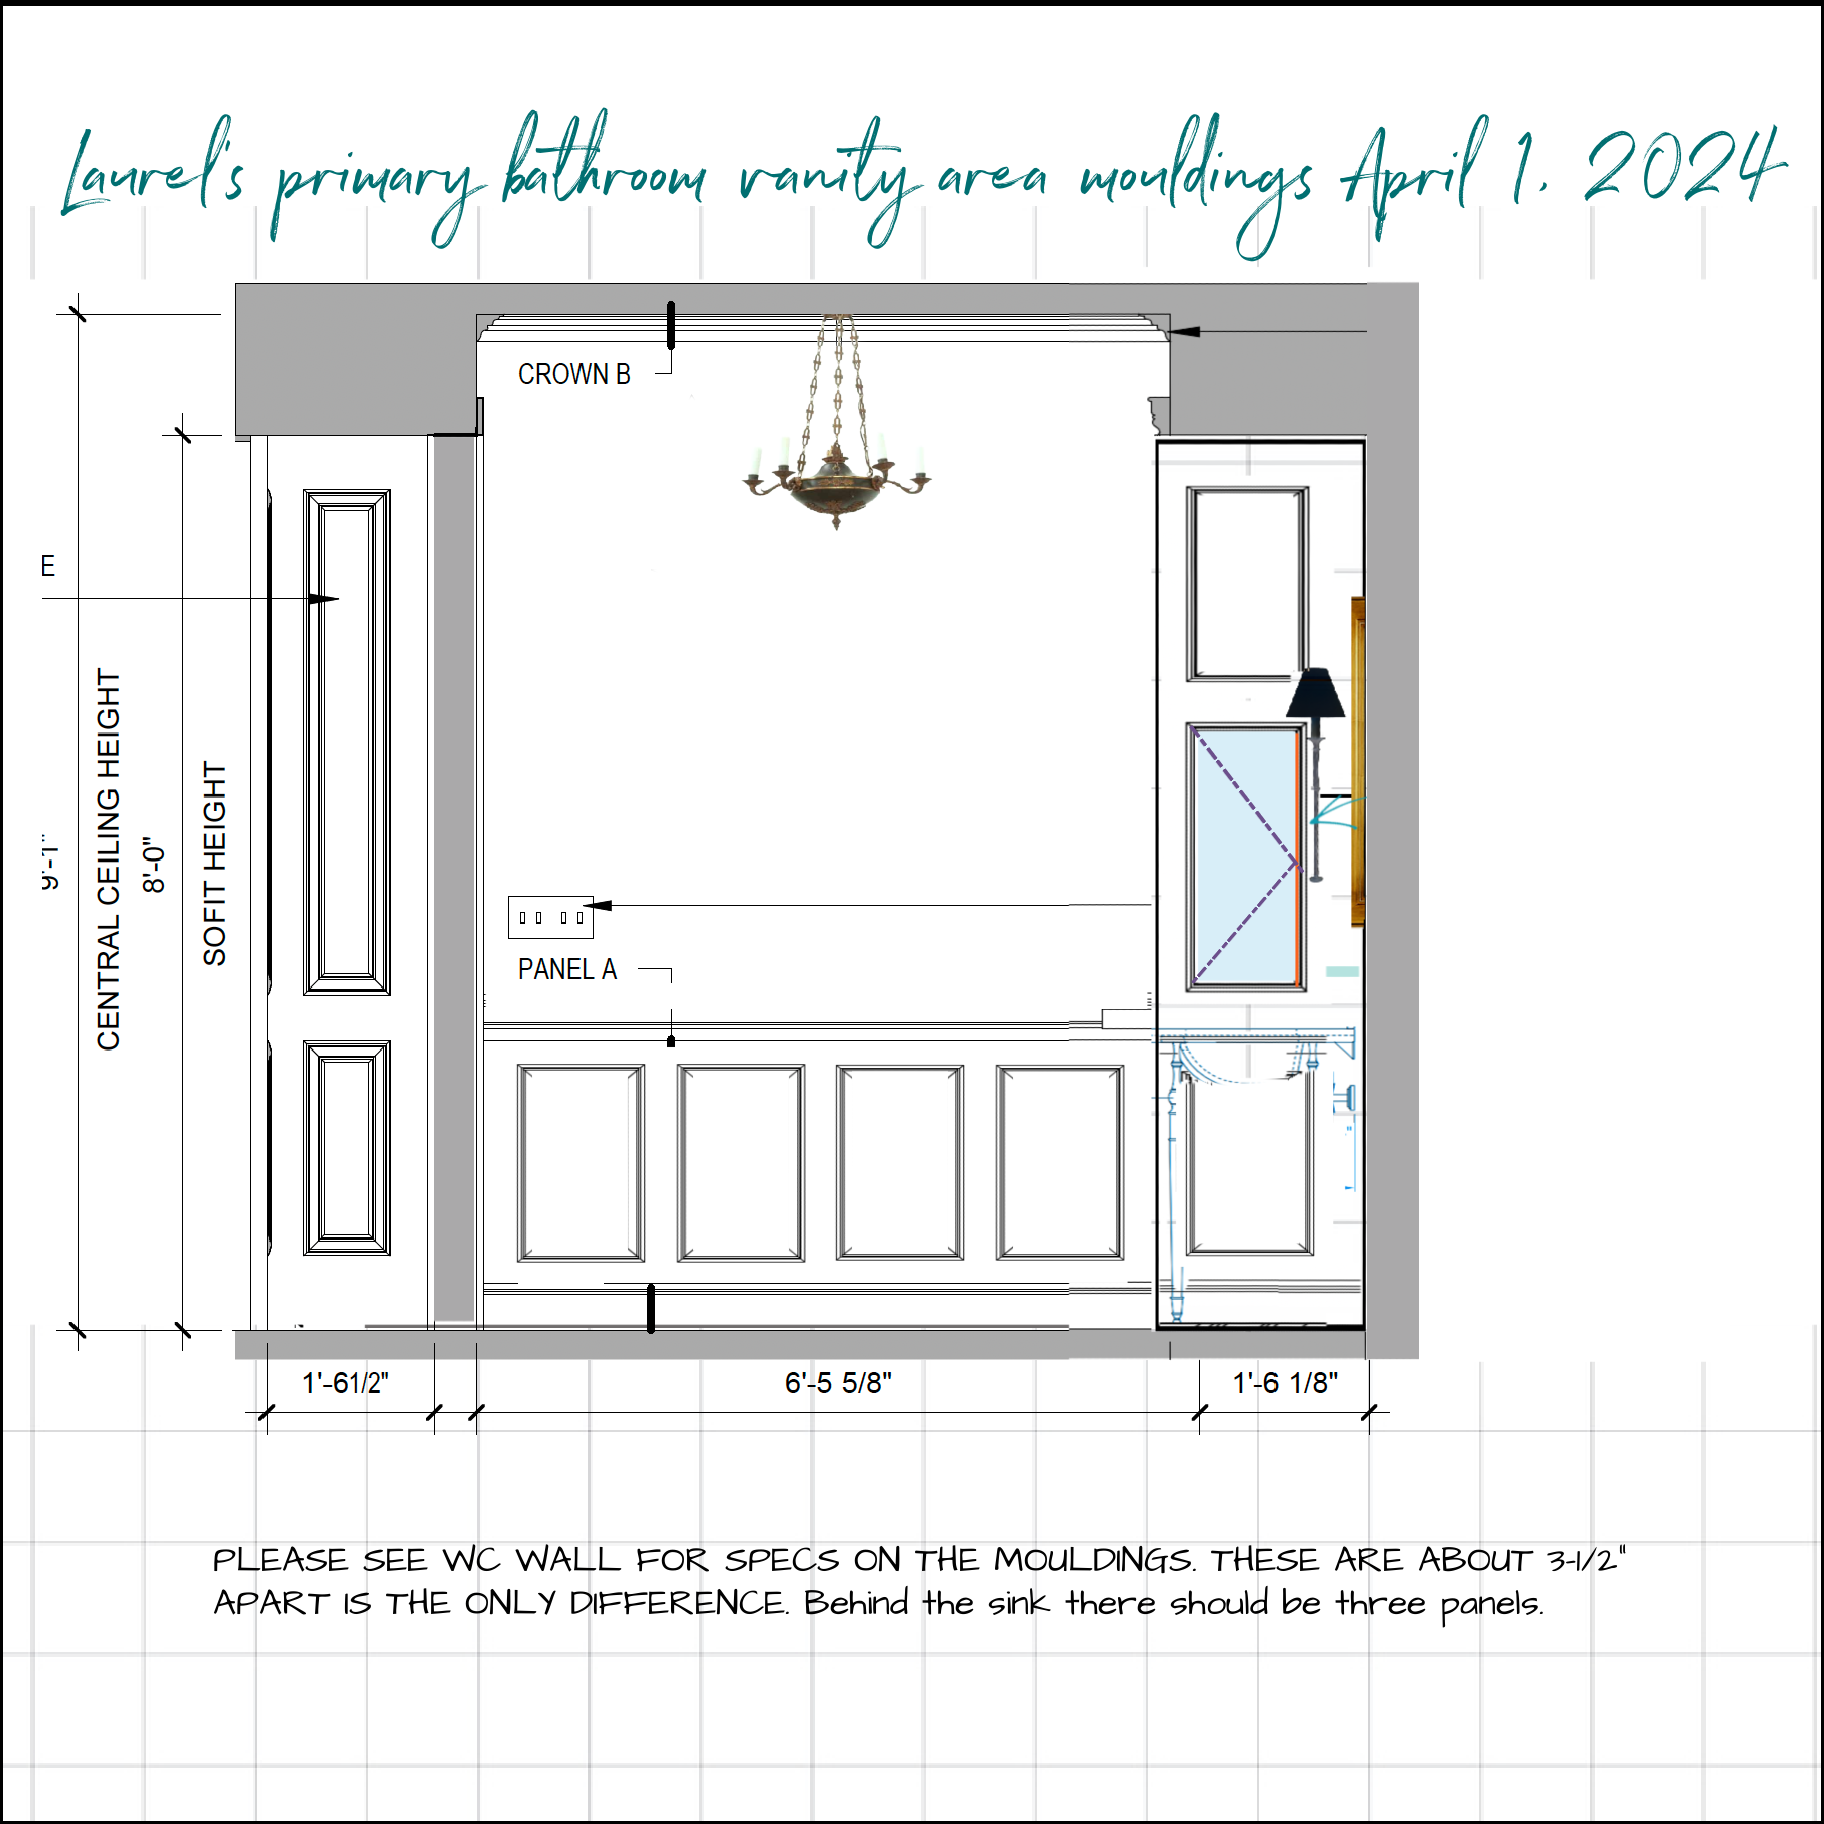 wainscoting primary bathroom vanity area April 1, 2024